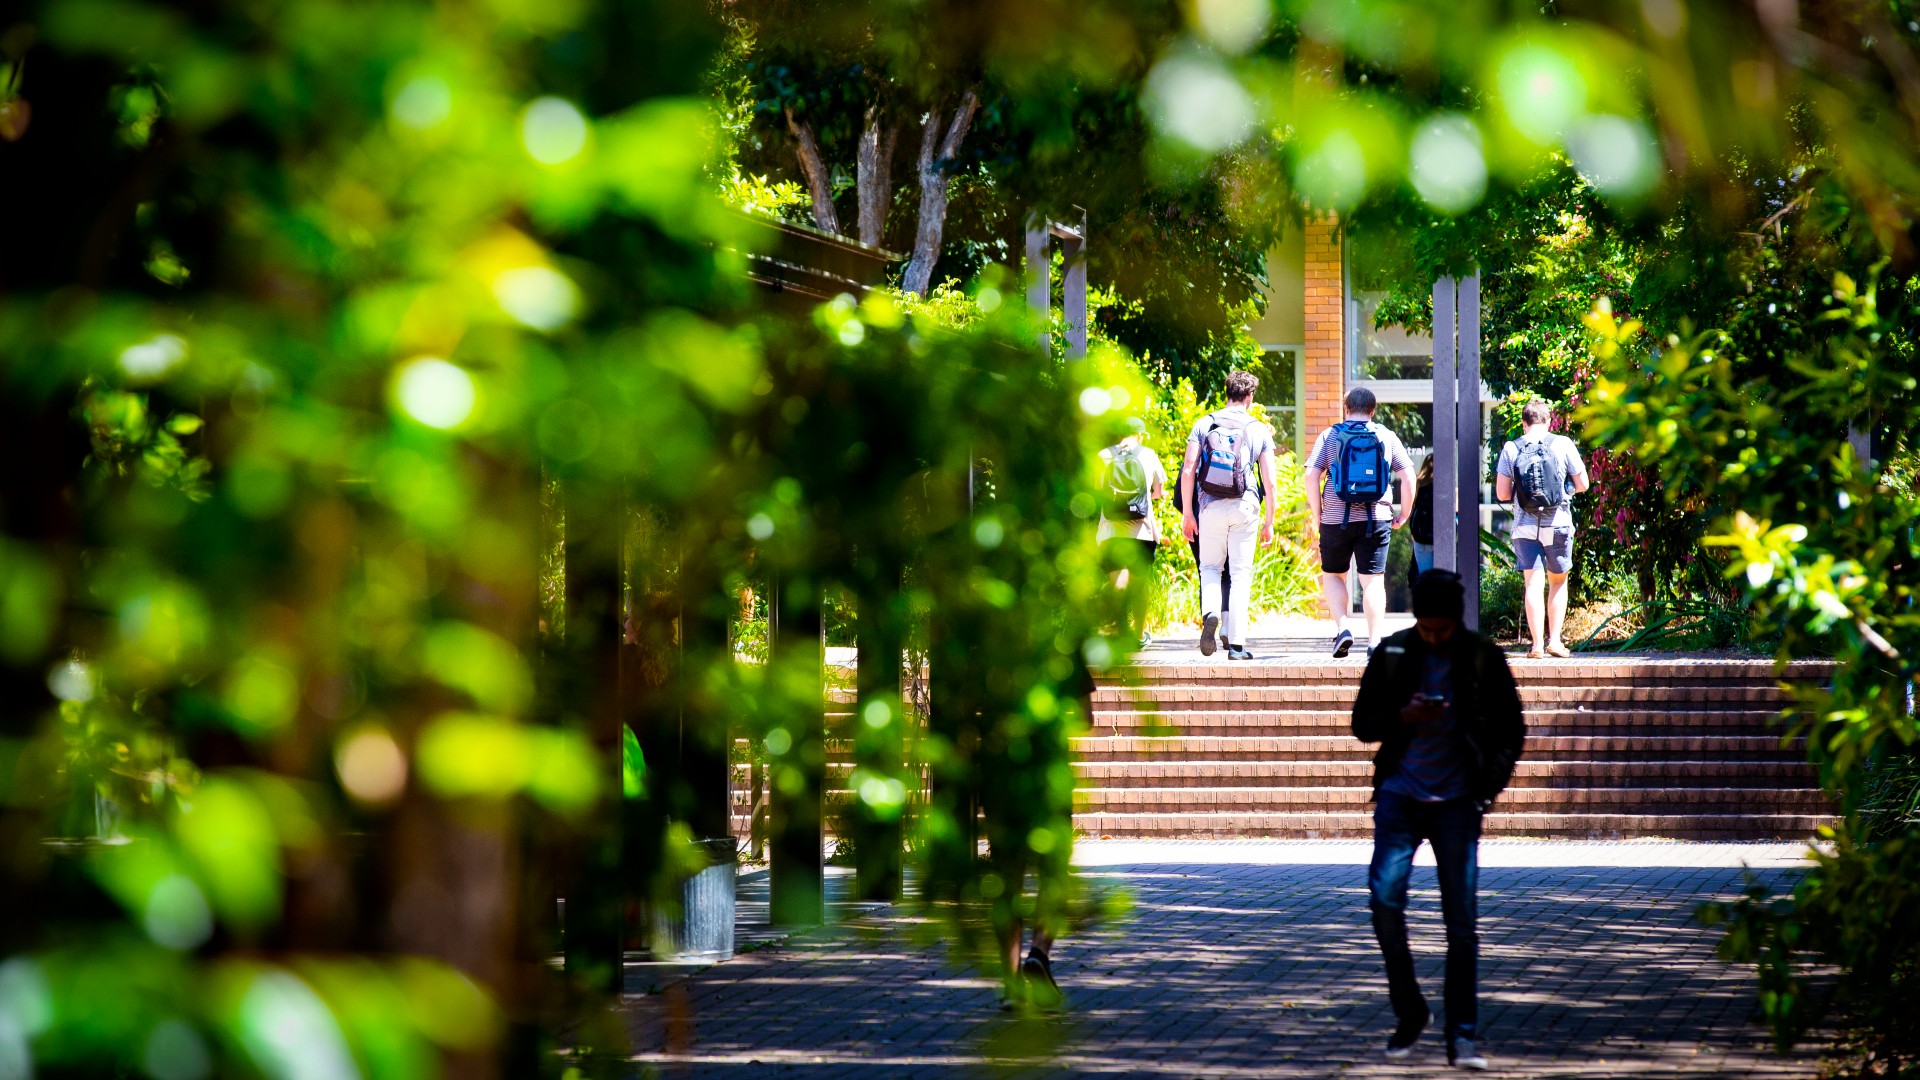 Students walk among the trees on Wollongong campus. Photo: Paul Jones